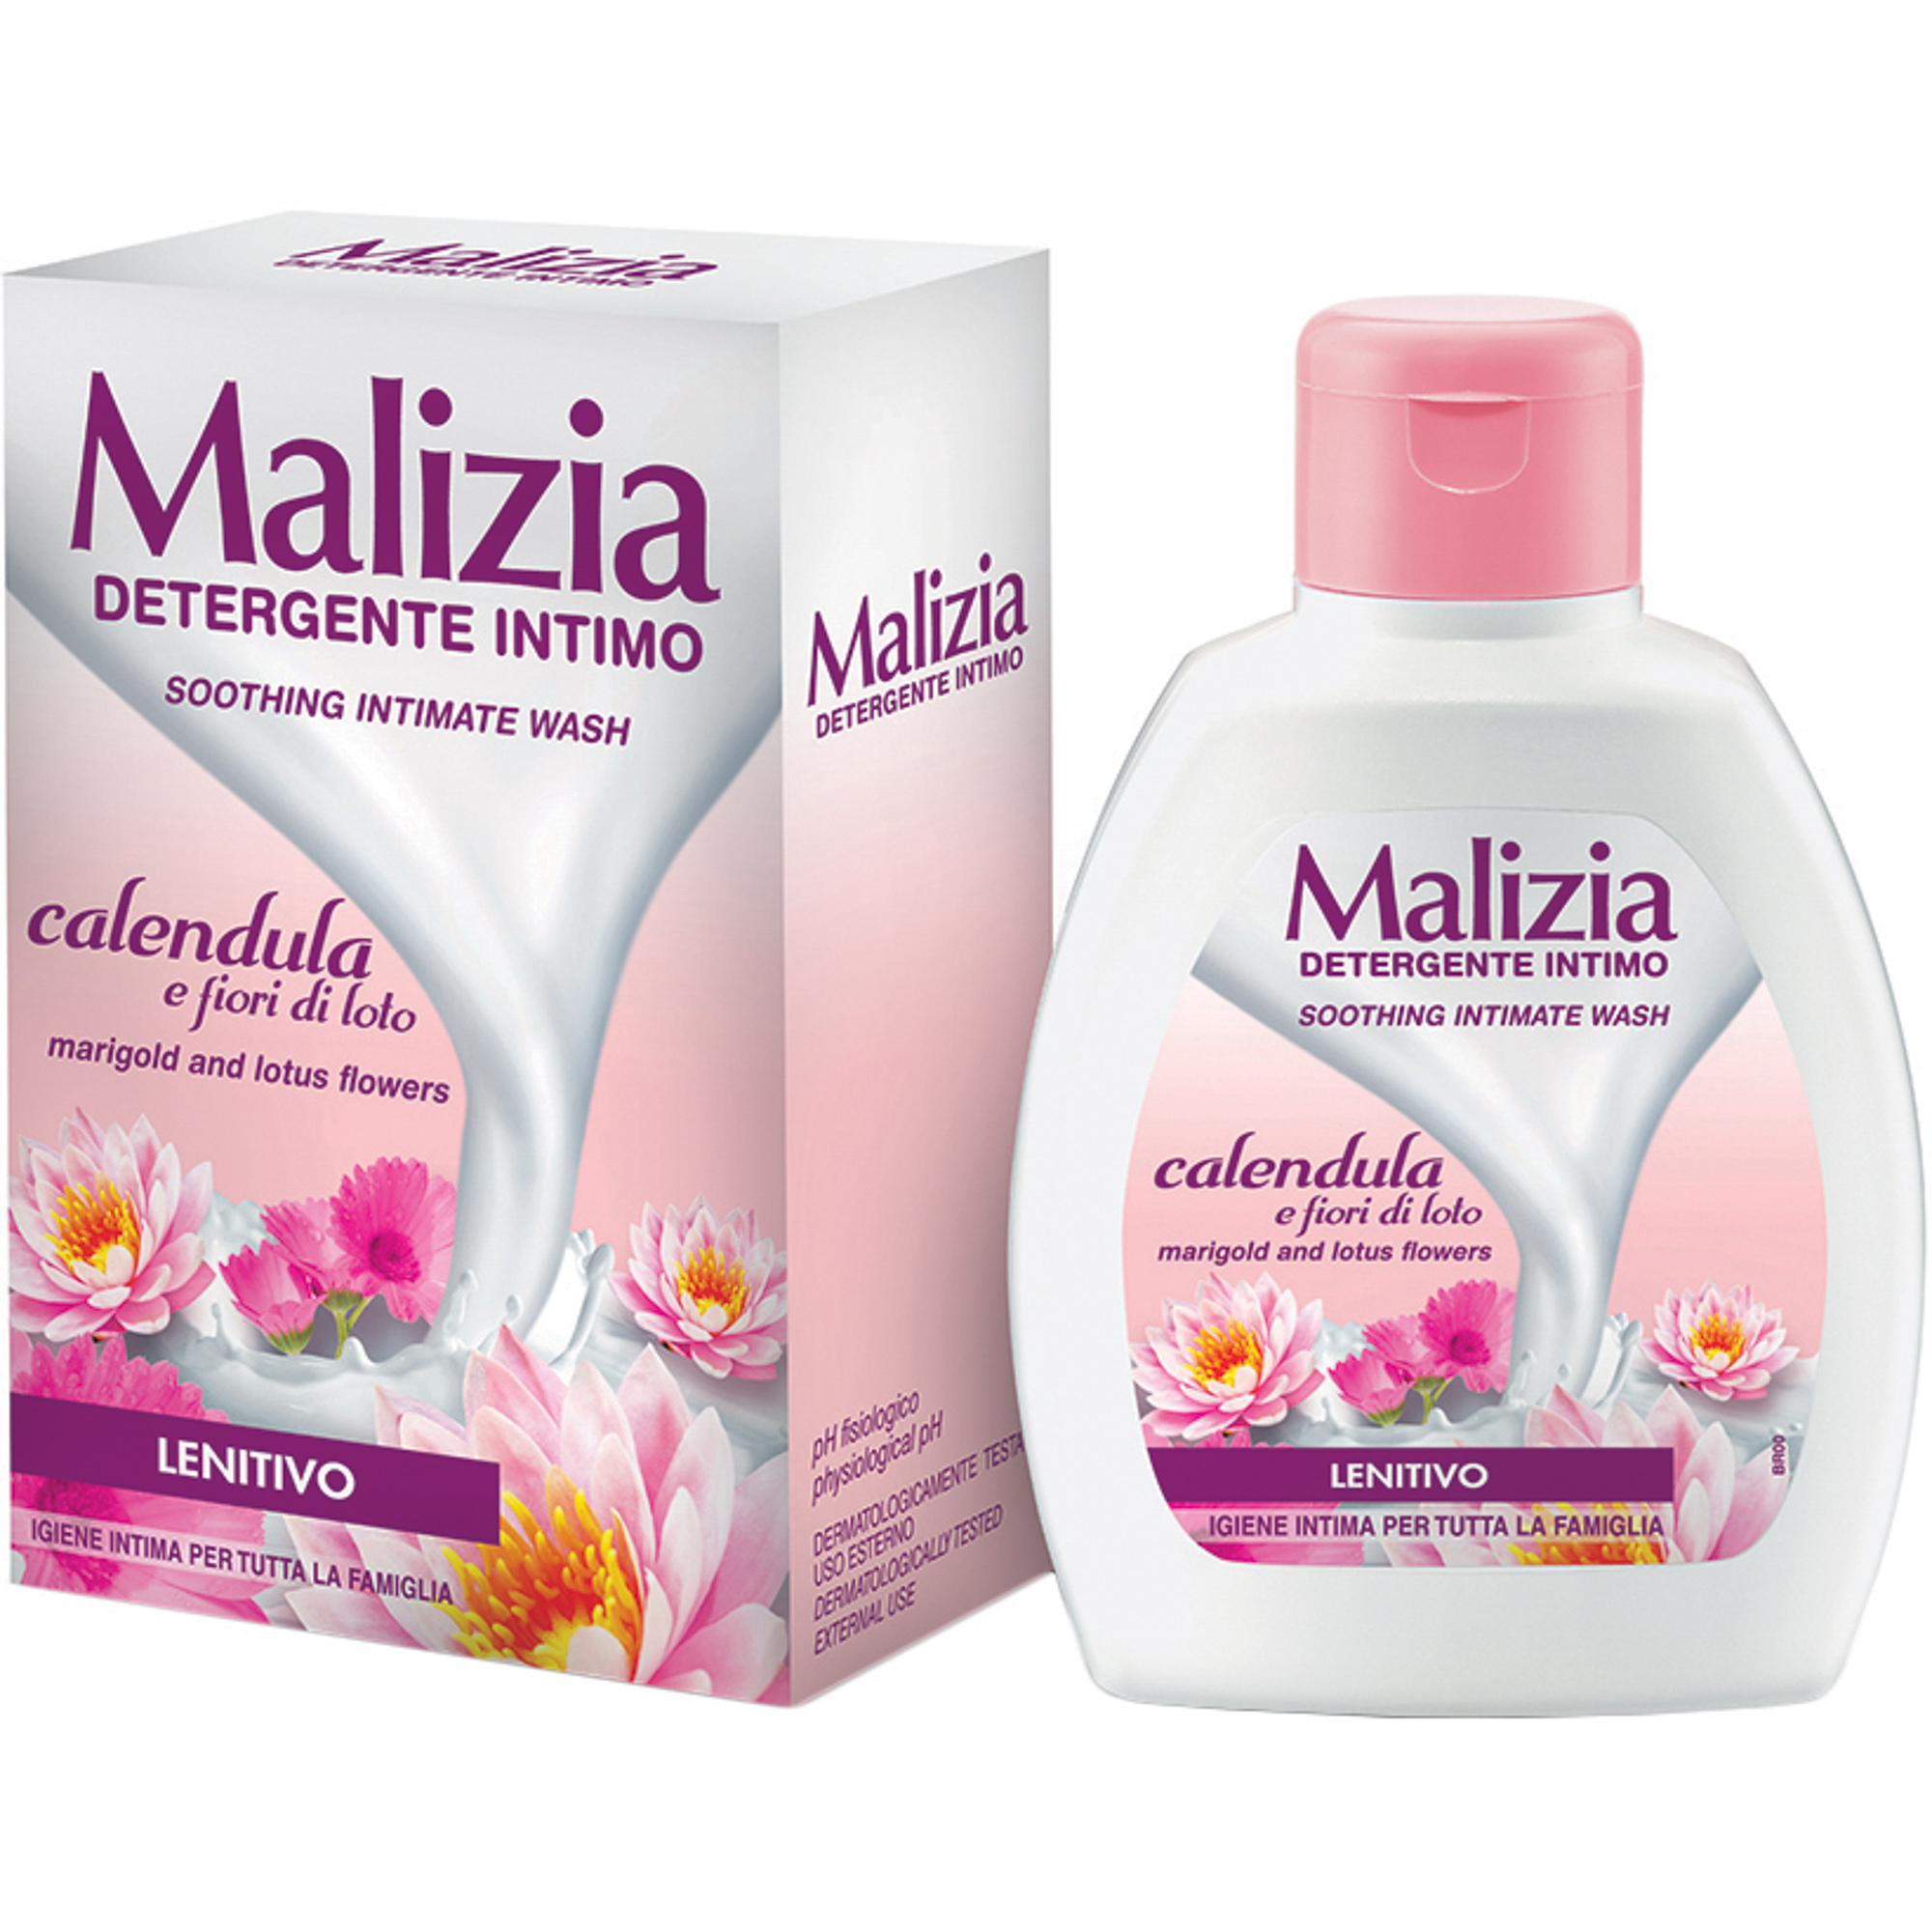 Гель для интимной гигиены Malizia Calendula and Aloe 200 мл гель для интимной гигиены malizia soothing intimate wash calendula 200 мл